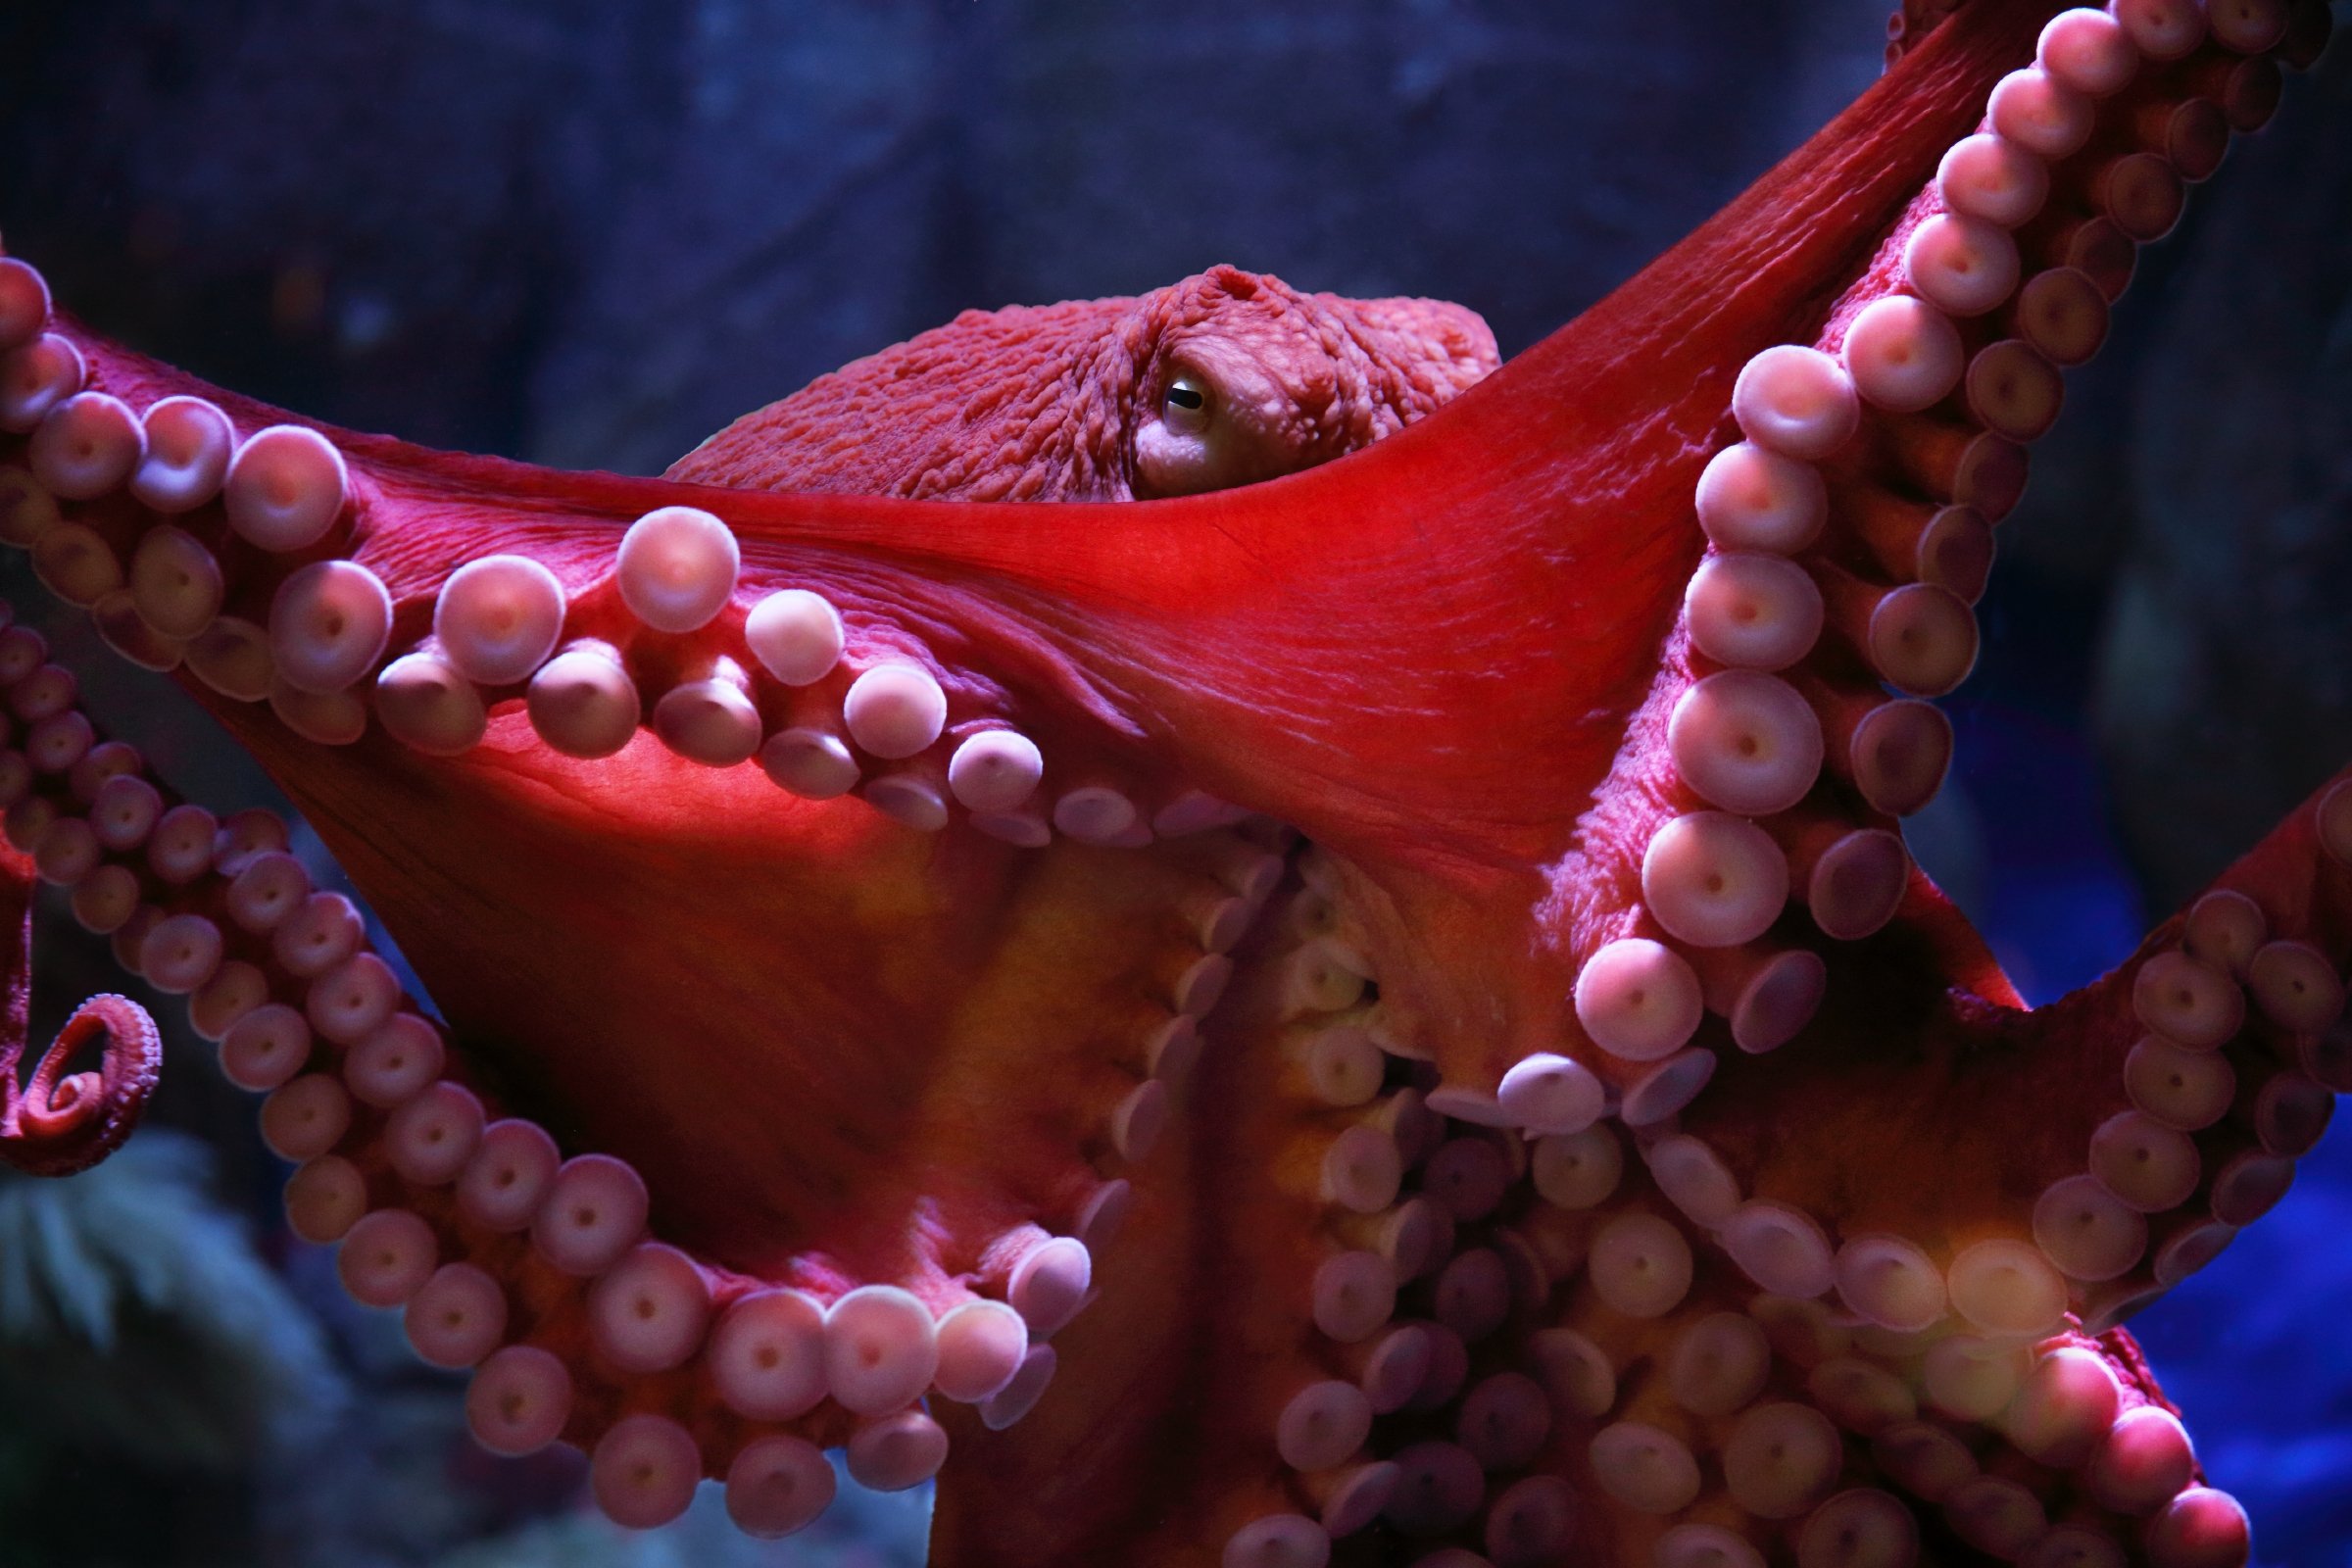 octopus tumblr background